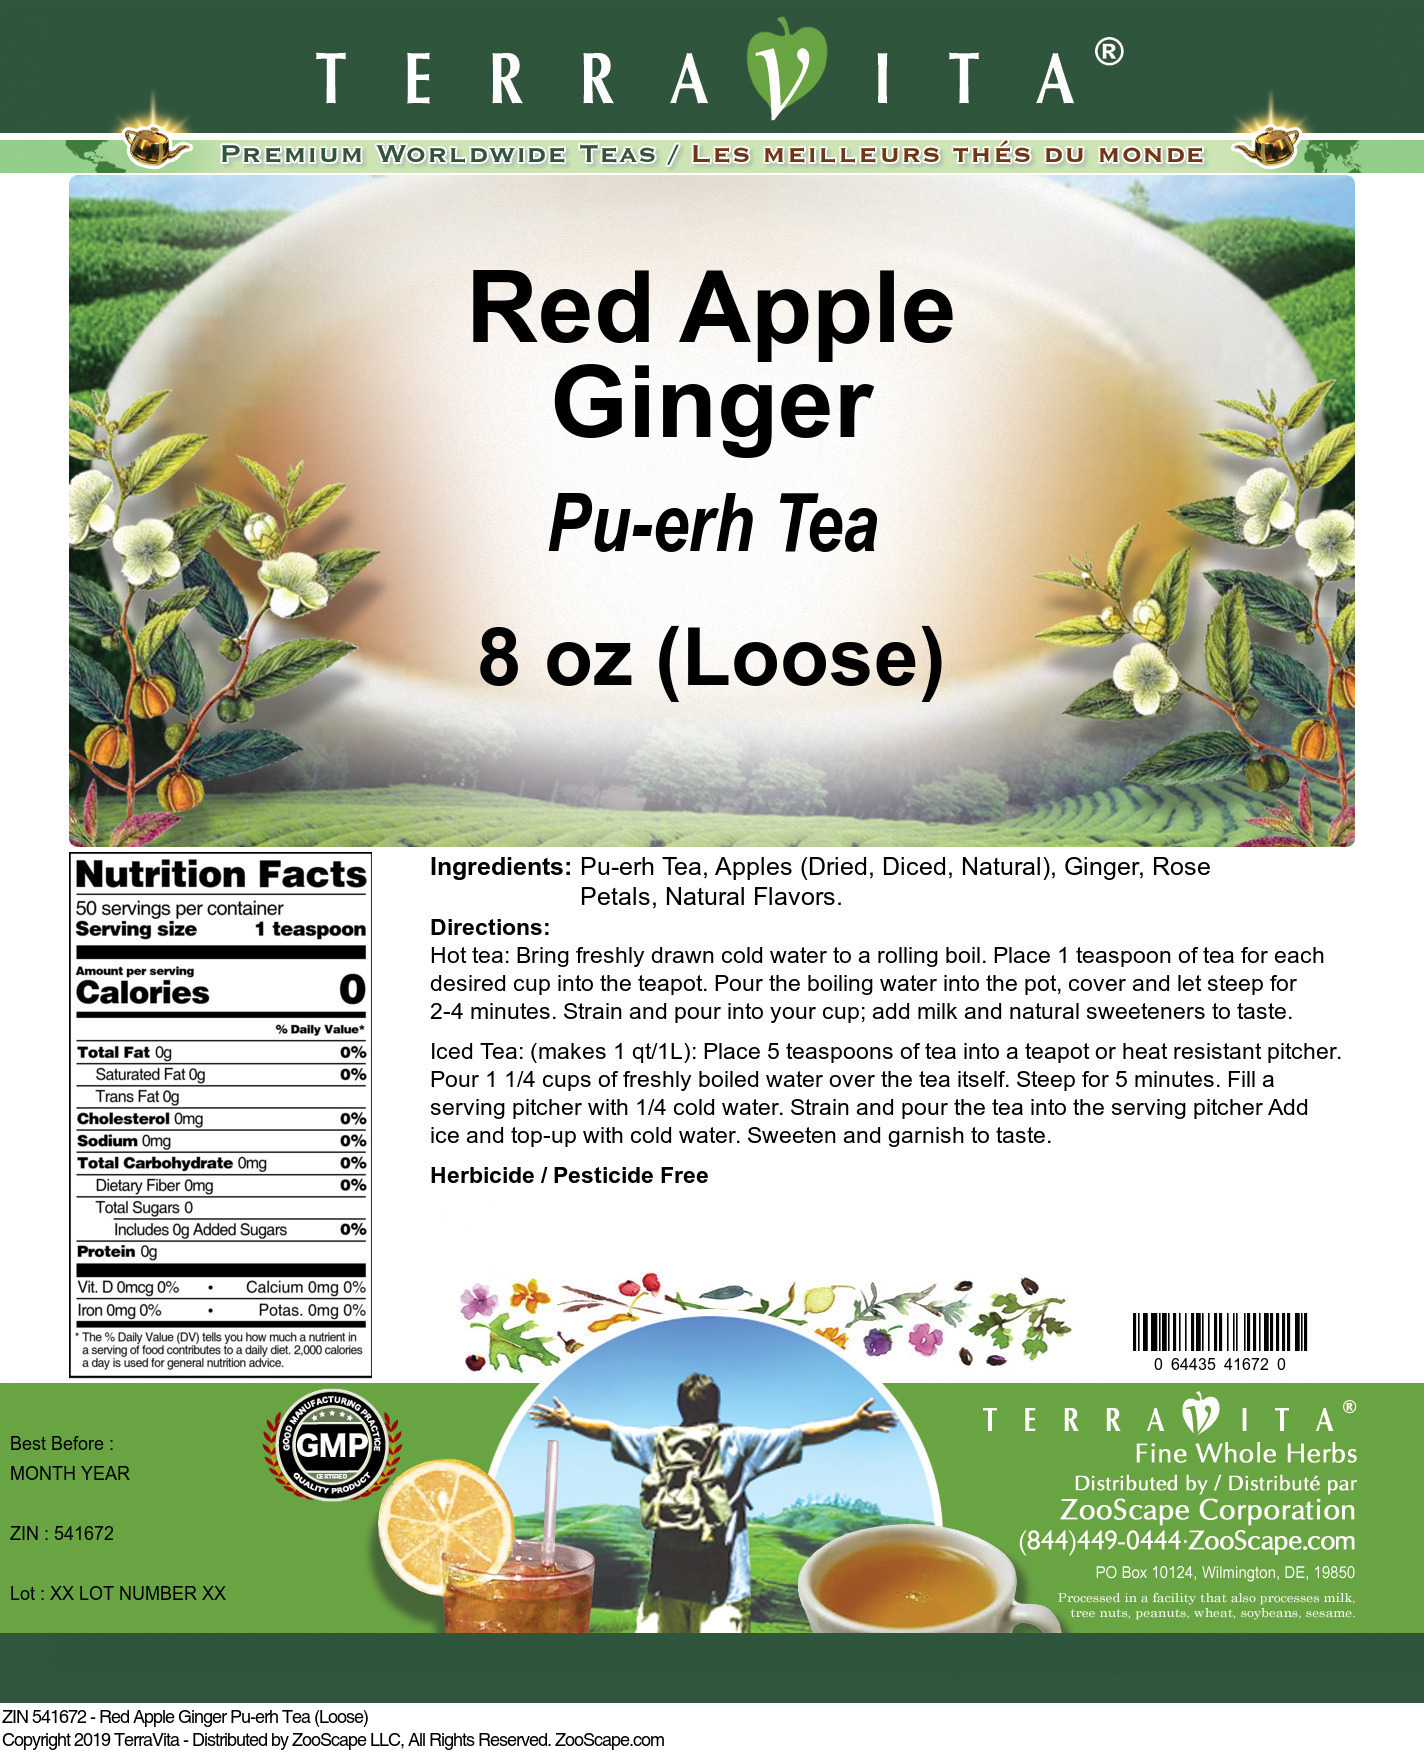 Red Apple Ginger Pu-erh Tea (Loose) - Label